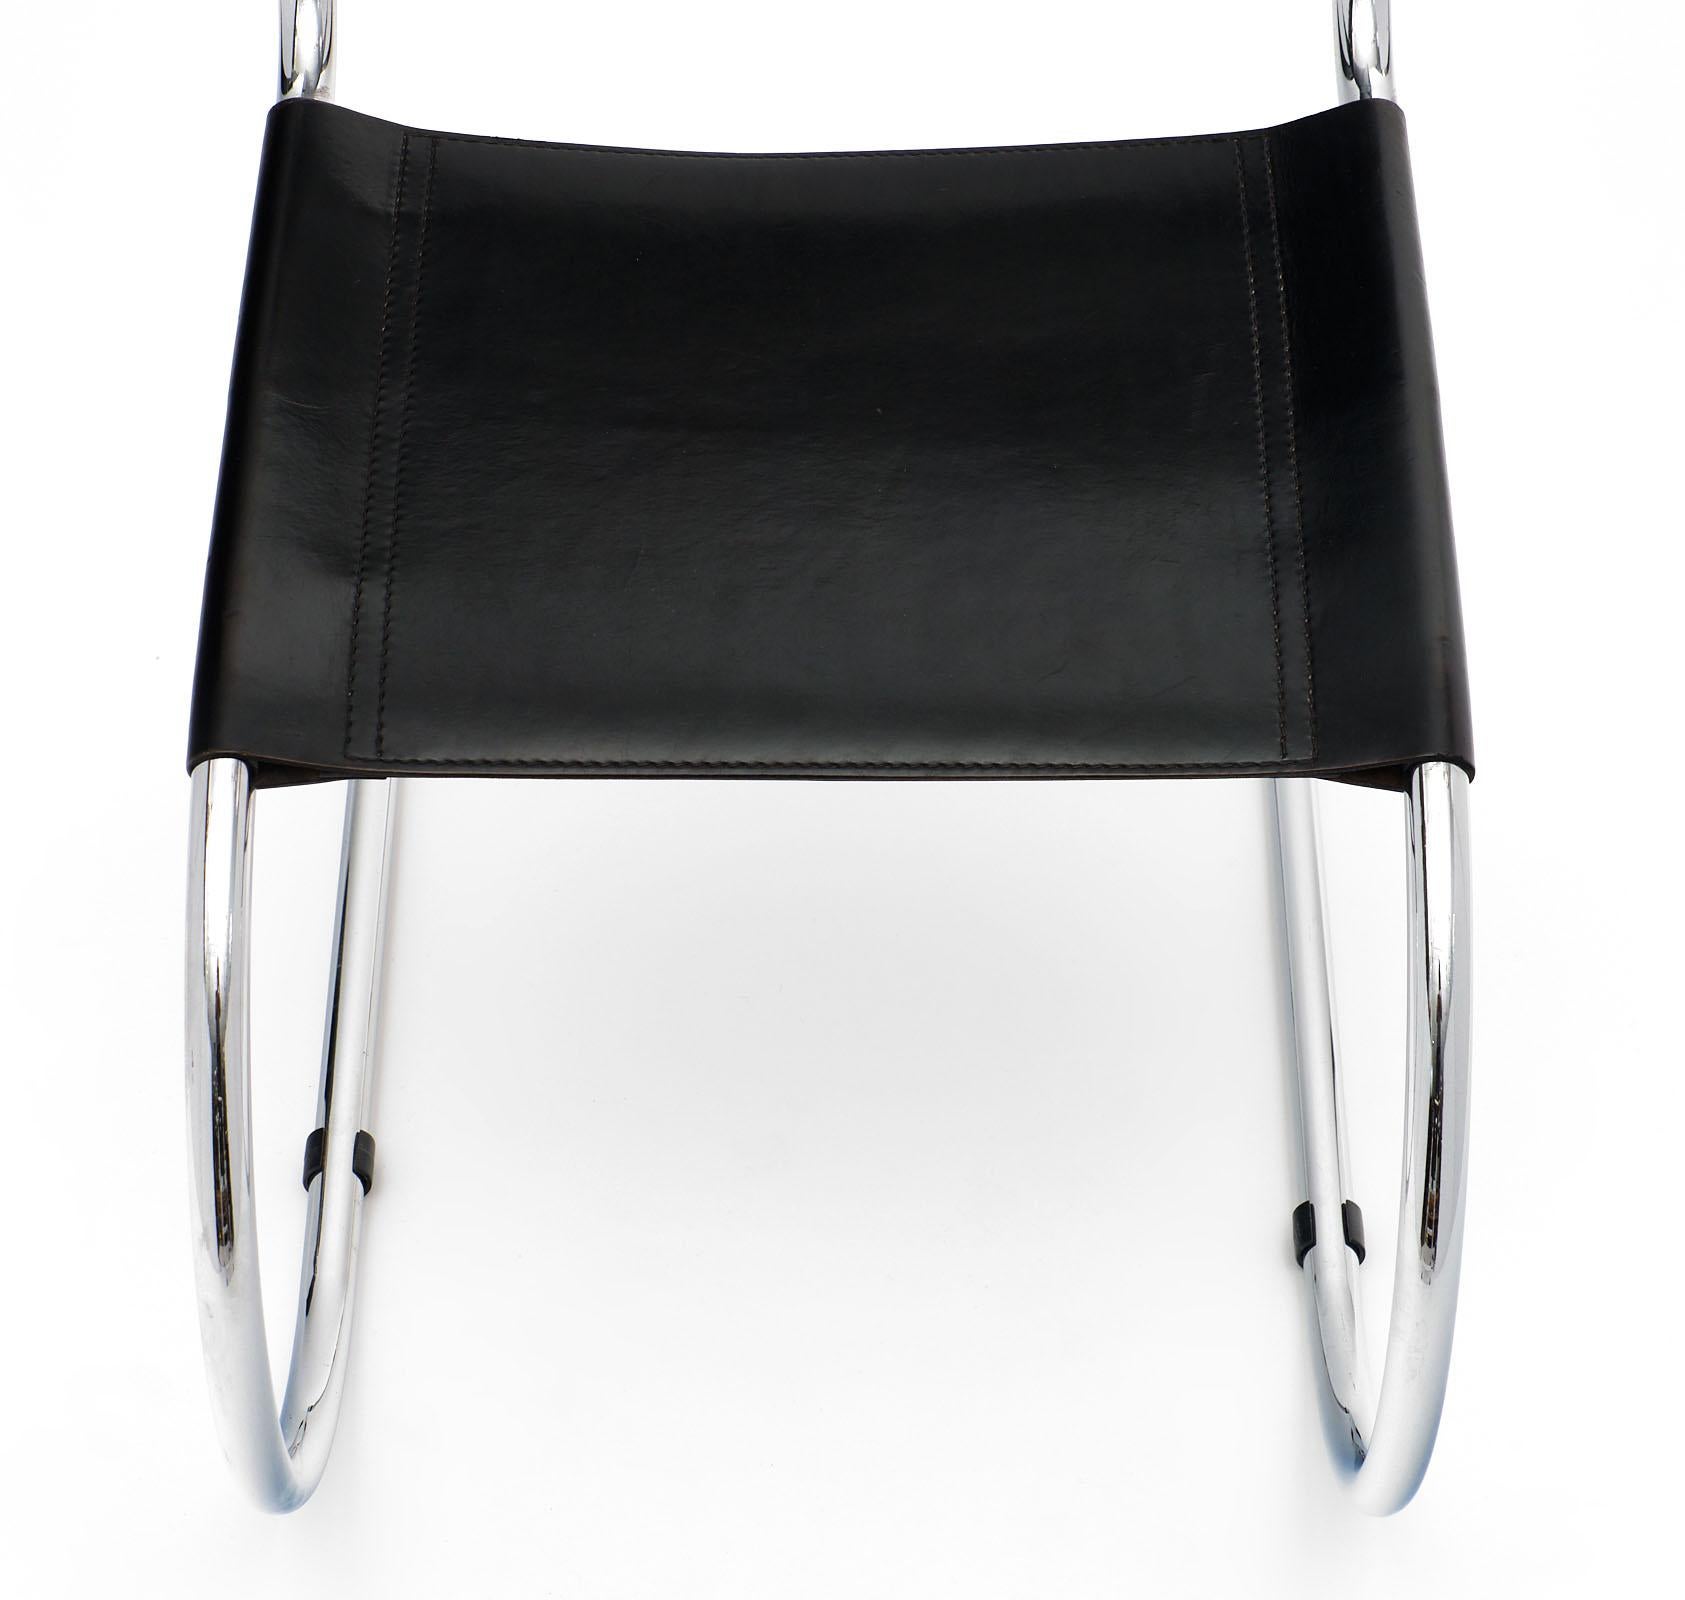 German Mies van der Rohe Vintage Cantilever Chairs